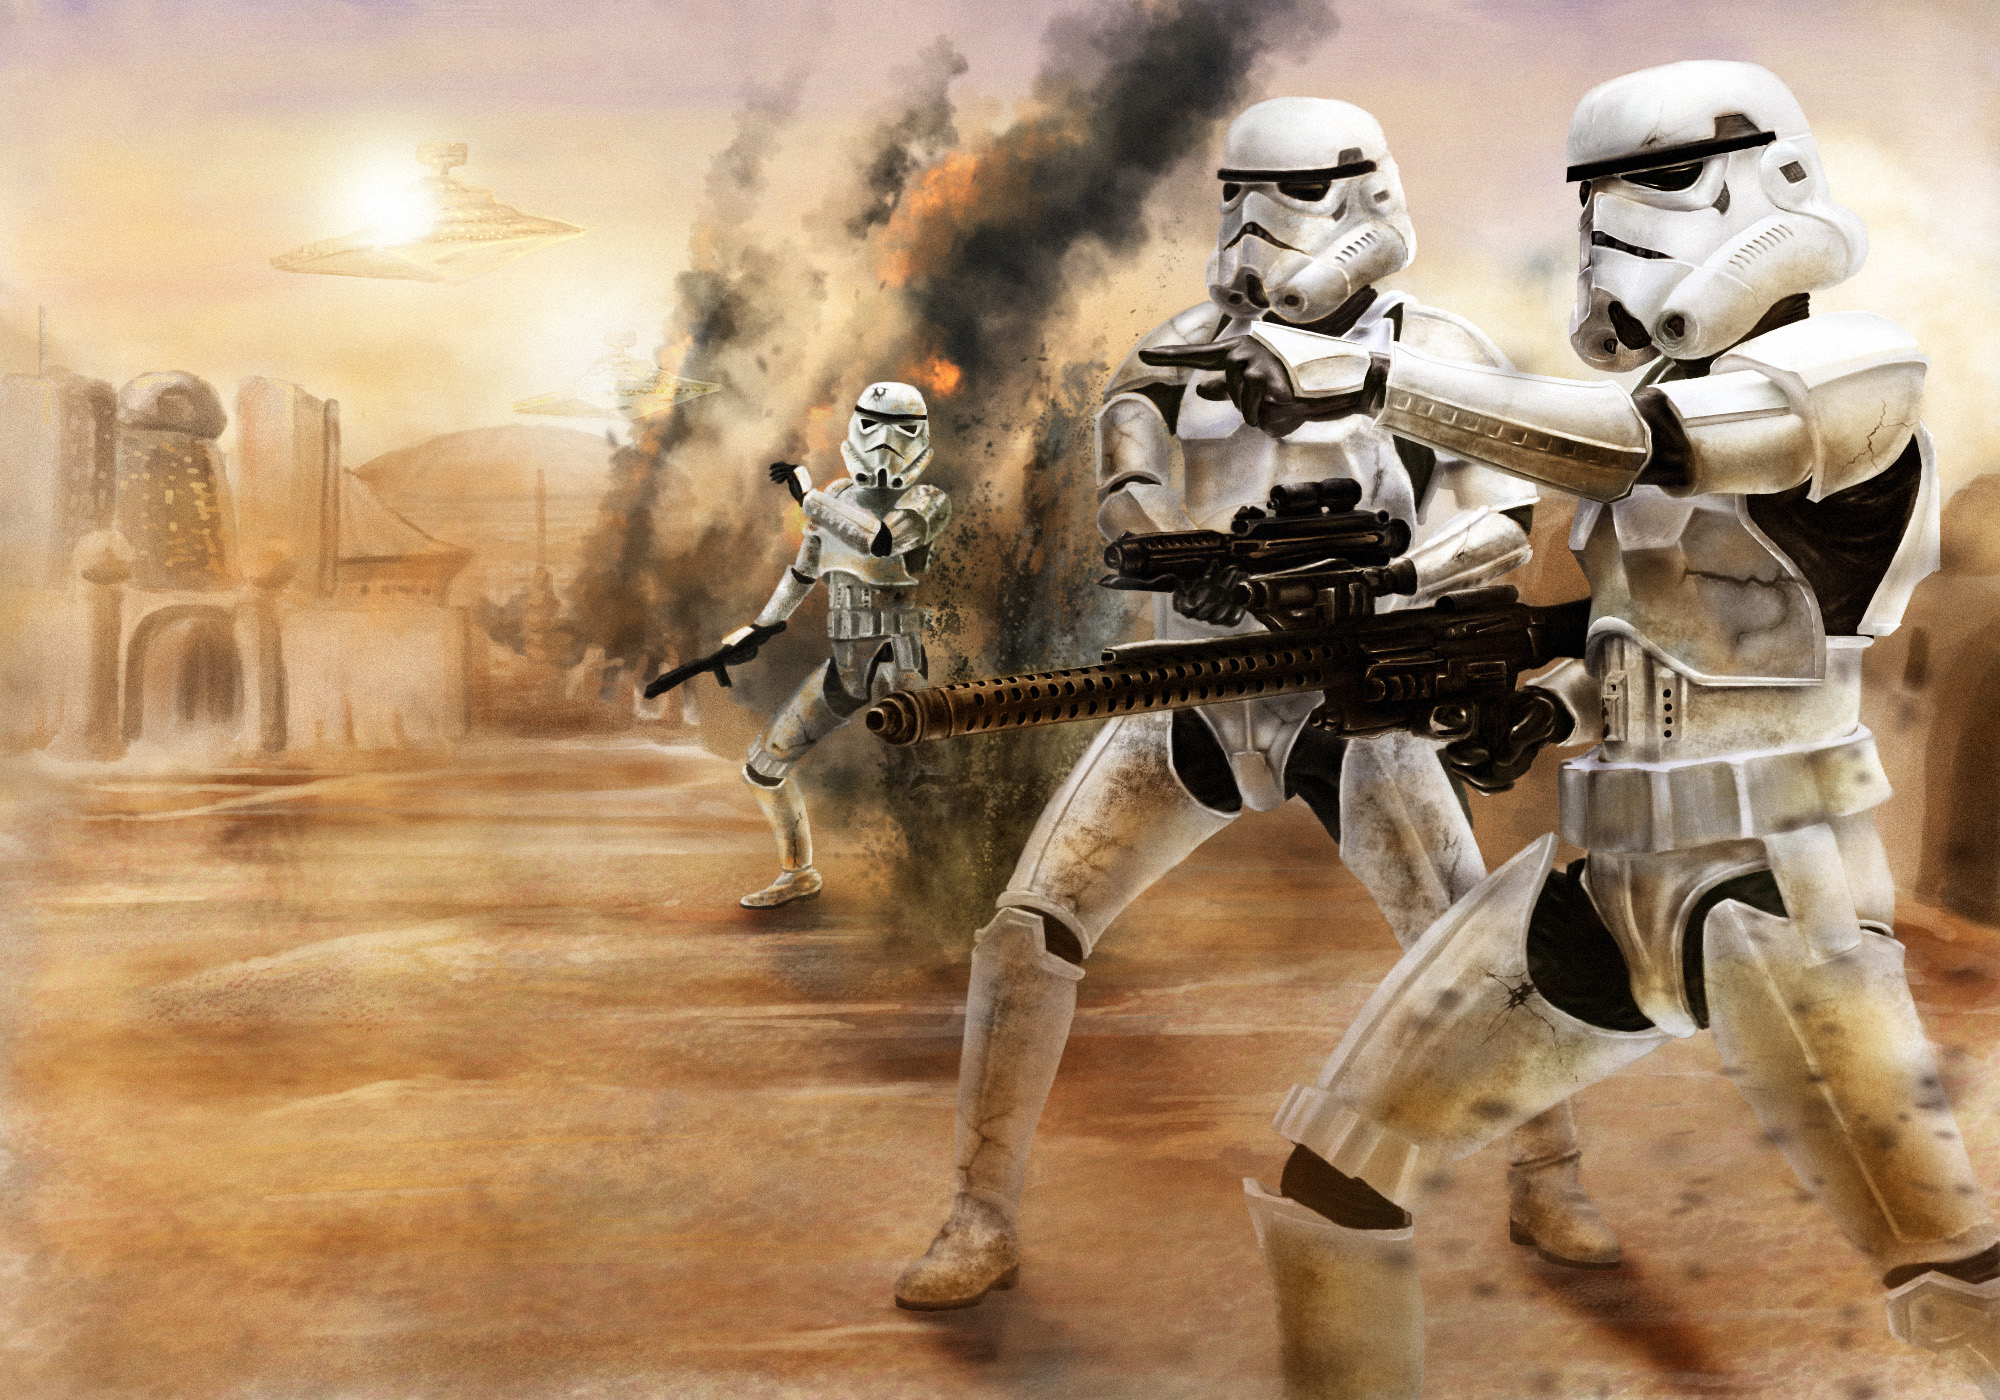 star_wars__stromtrooper_battle_by_dookieadz-d3klhdn.jpg